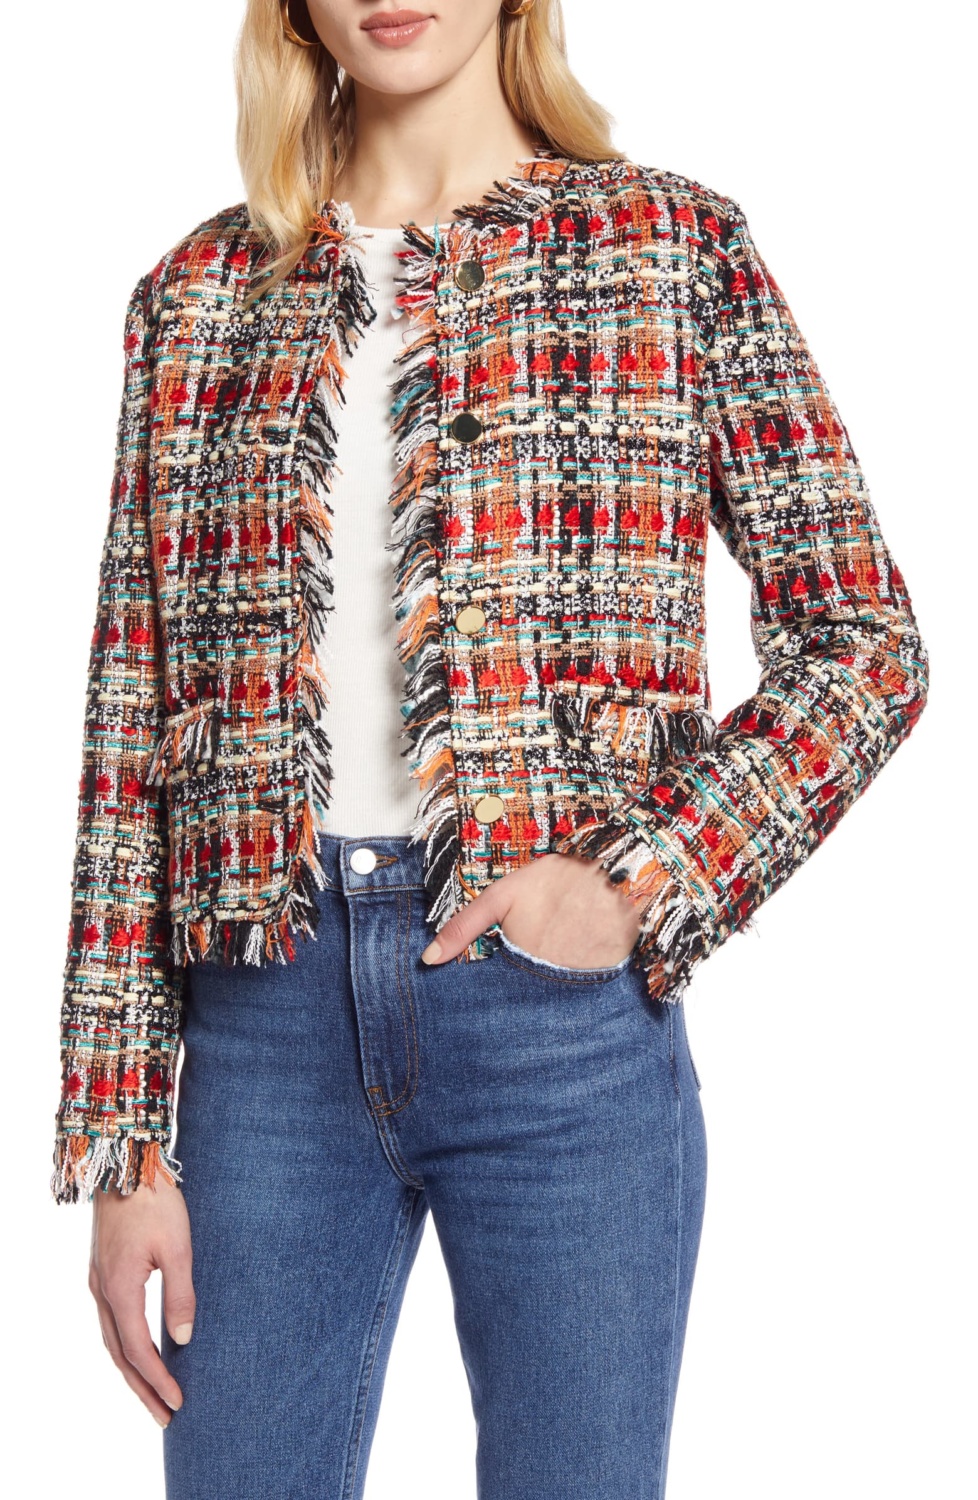 Tweed Jackets and Coats For Women - une femme d'un certain âge